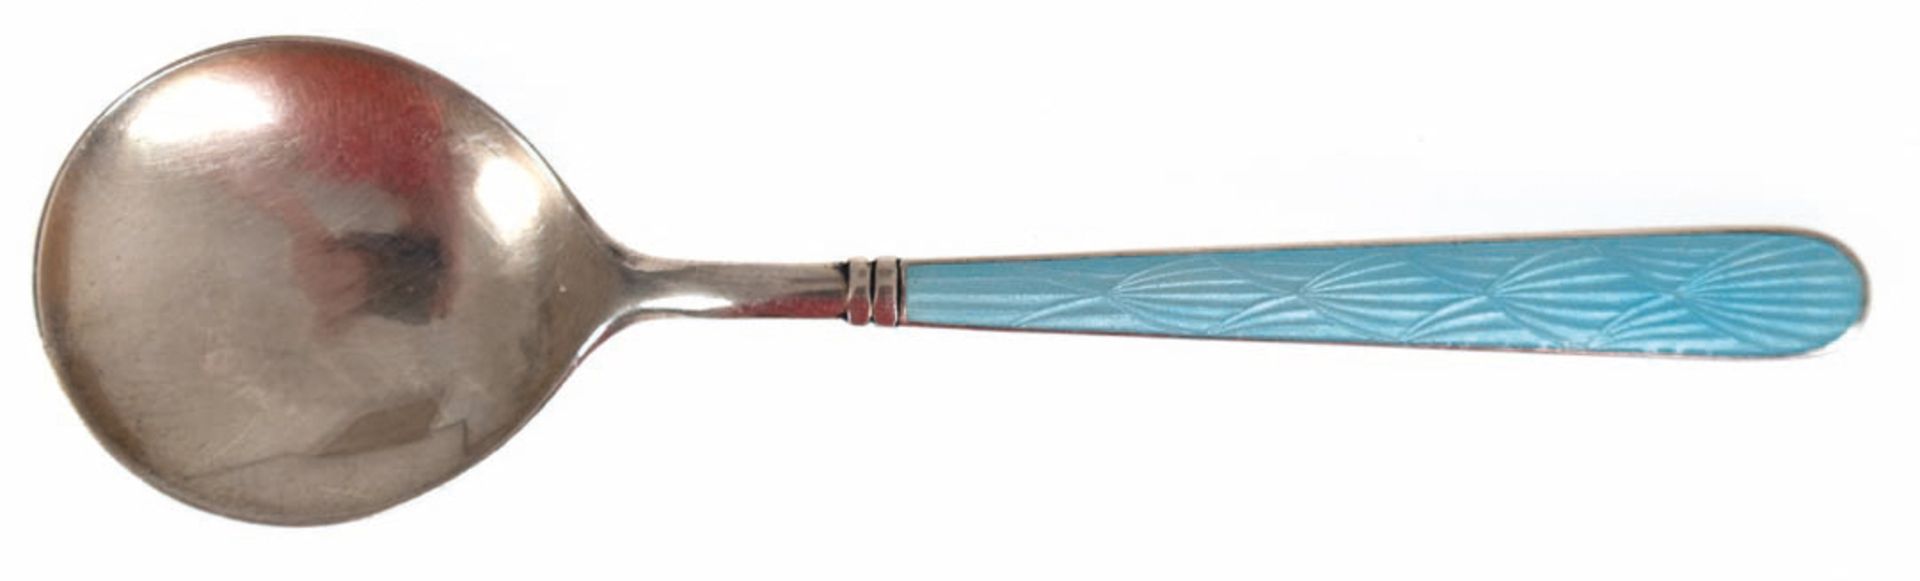 Zuckerlöffel, 916er Silber, guillochiert, hellblaue Transluzidemaille, punziert, ca. 29 g, L. 13 cm